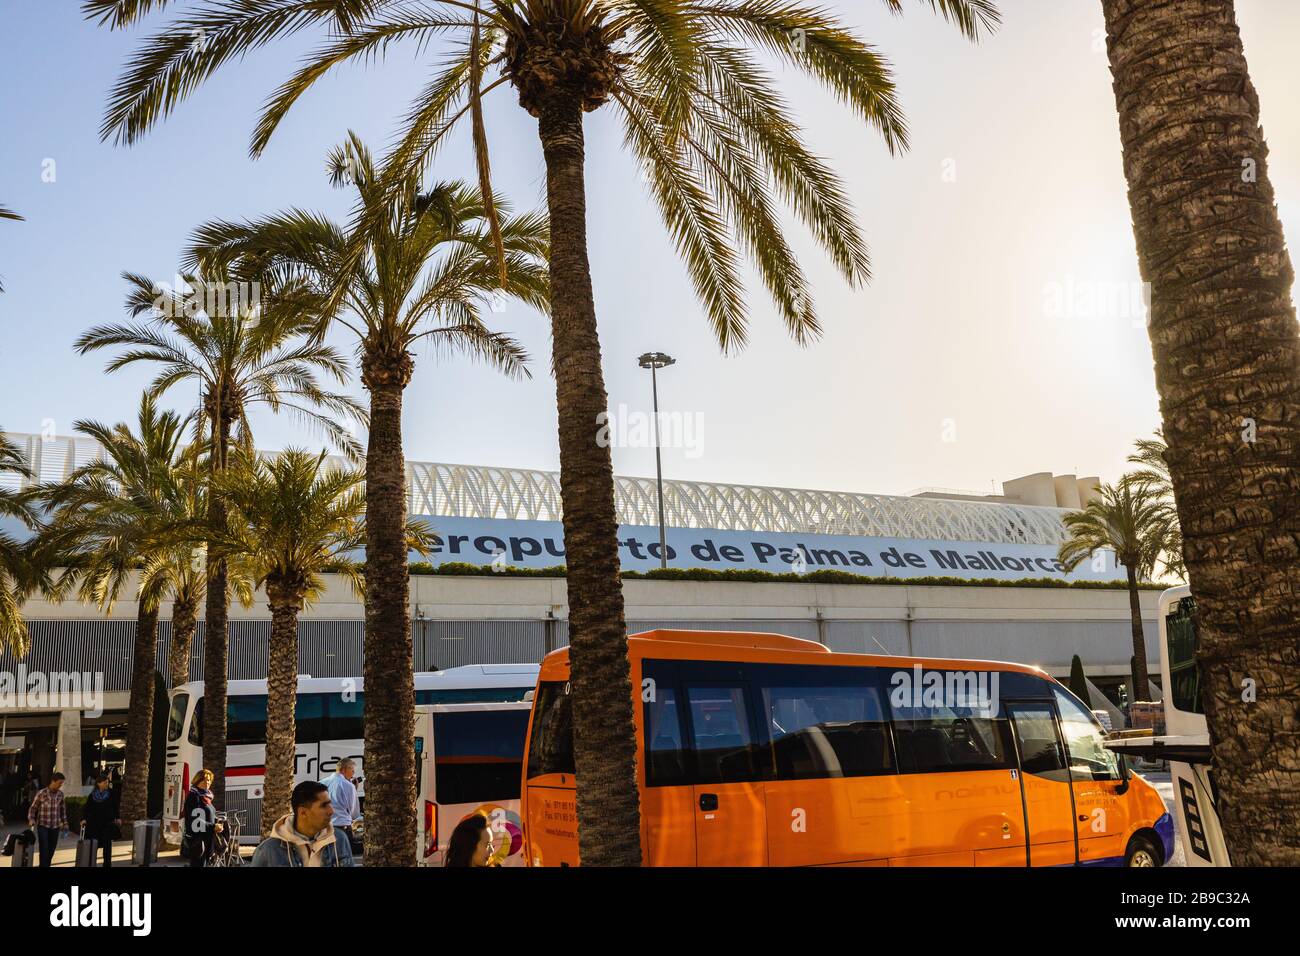 Palma di Mallorca, Spain - 02/28/2020: Entrance of the Airport Palma di Mallorca with palm trees on a sunny day Stock Photo